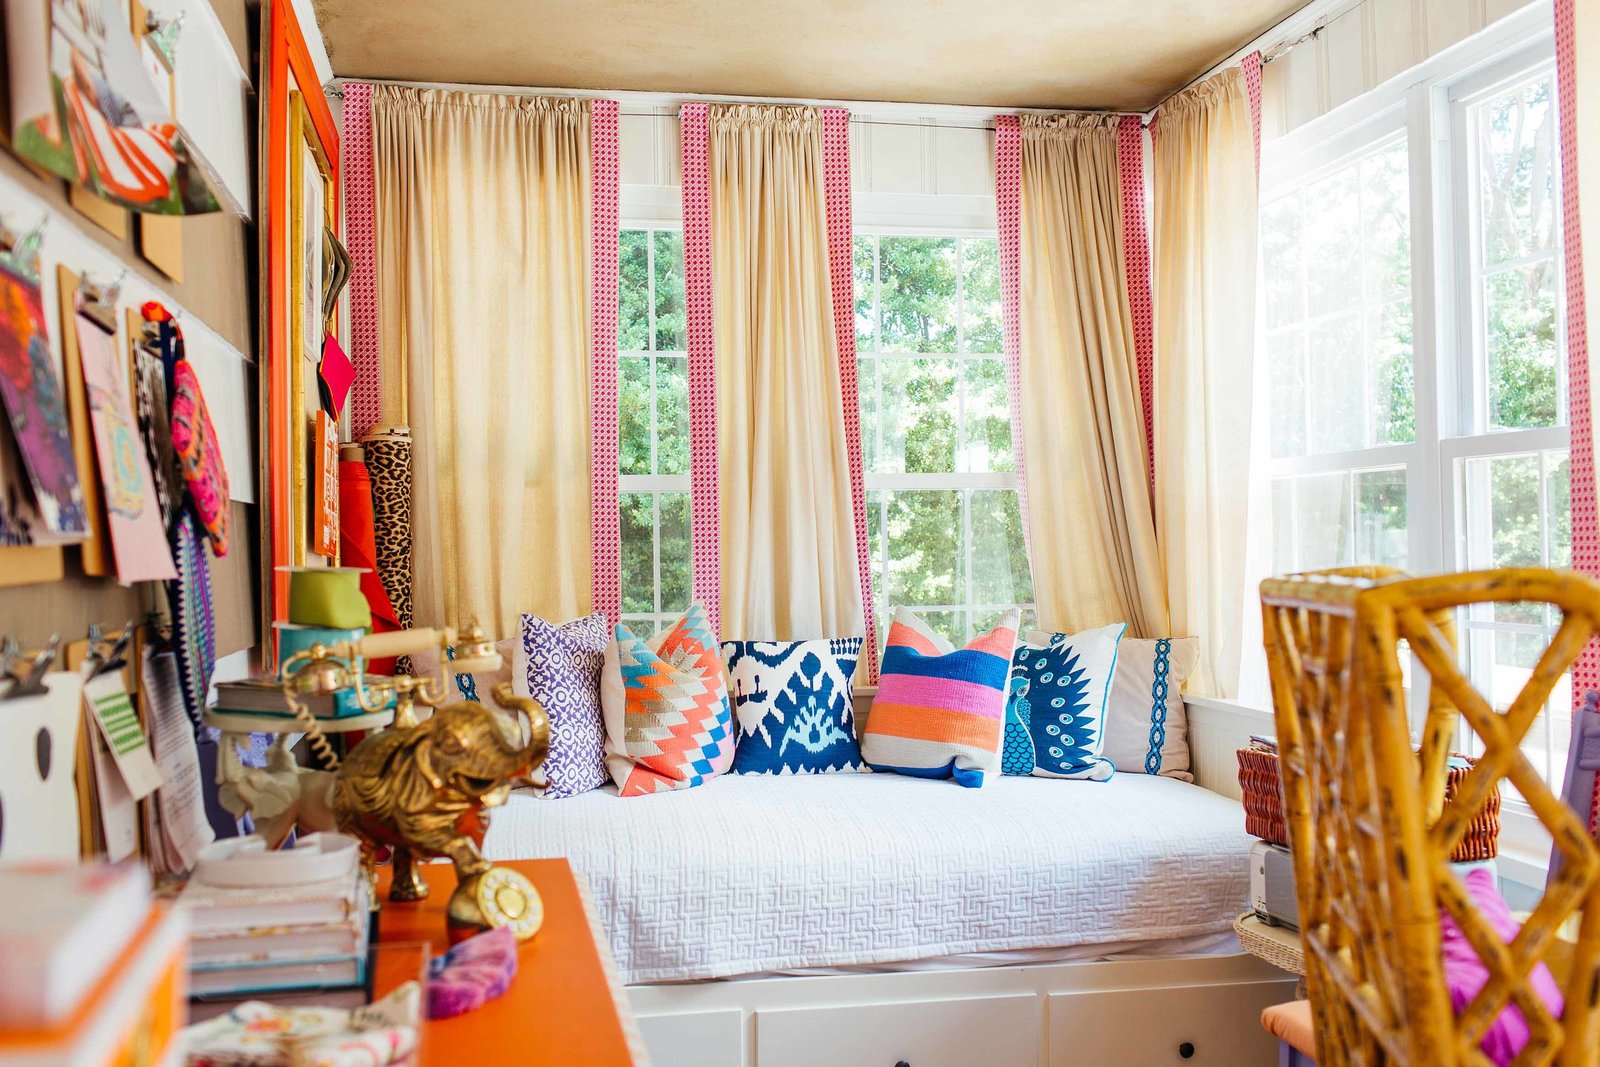 A day bed in a colorful interior design studio.